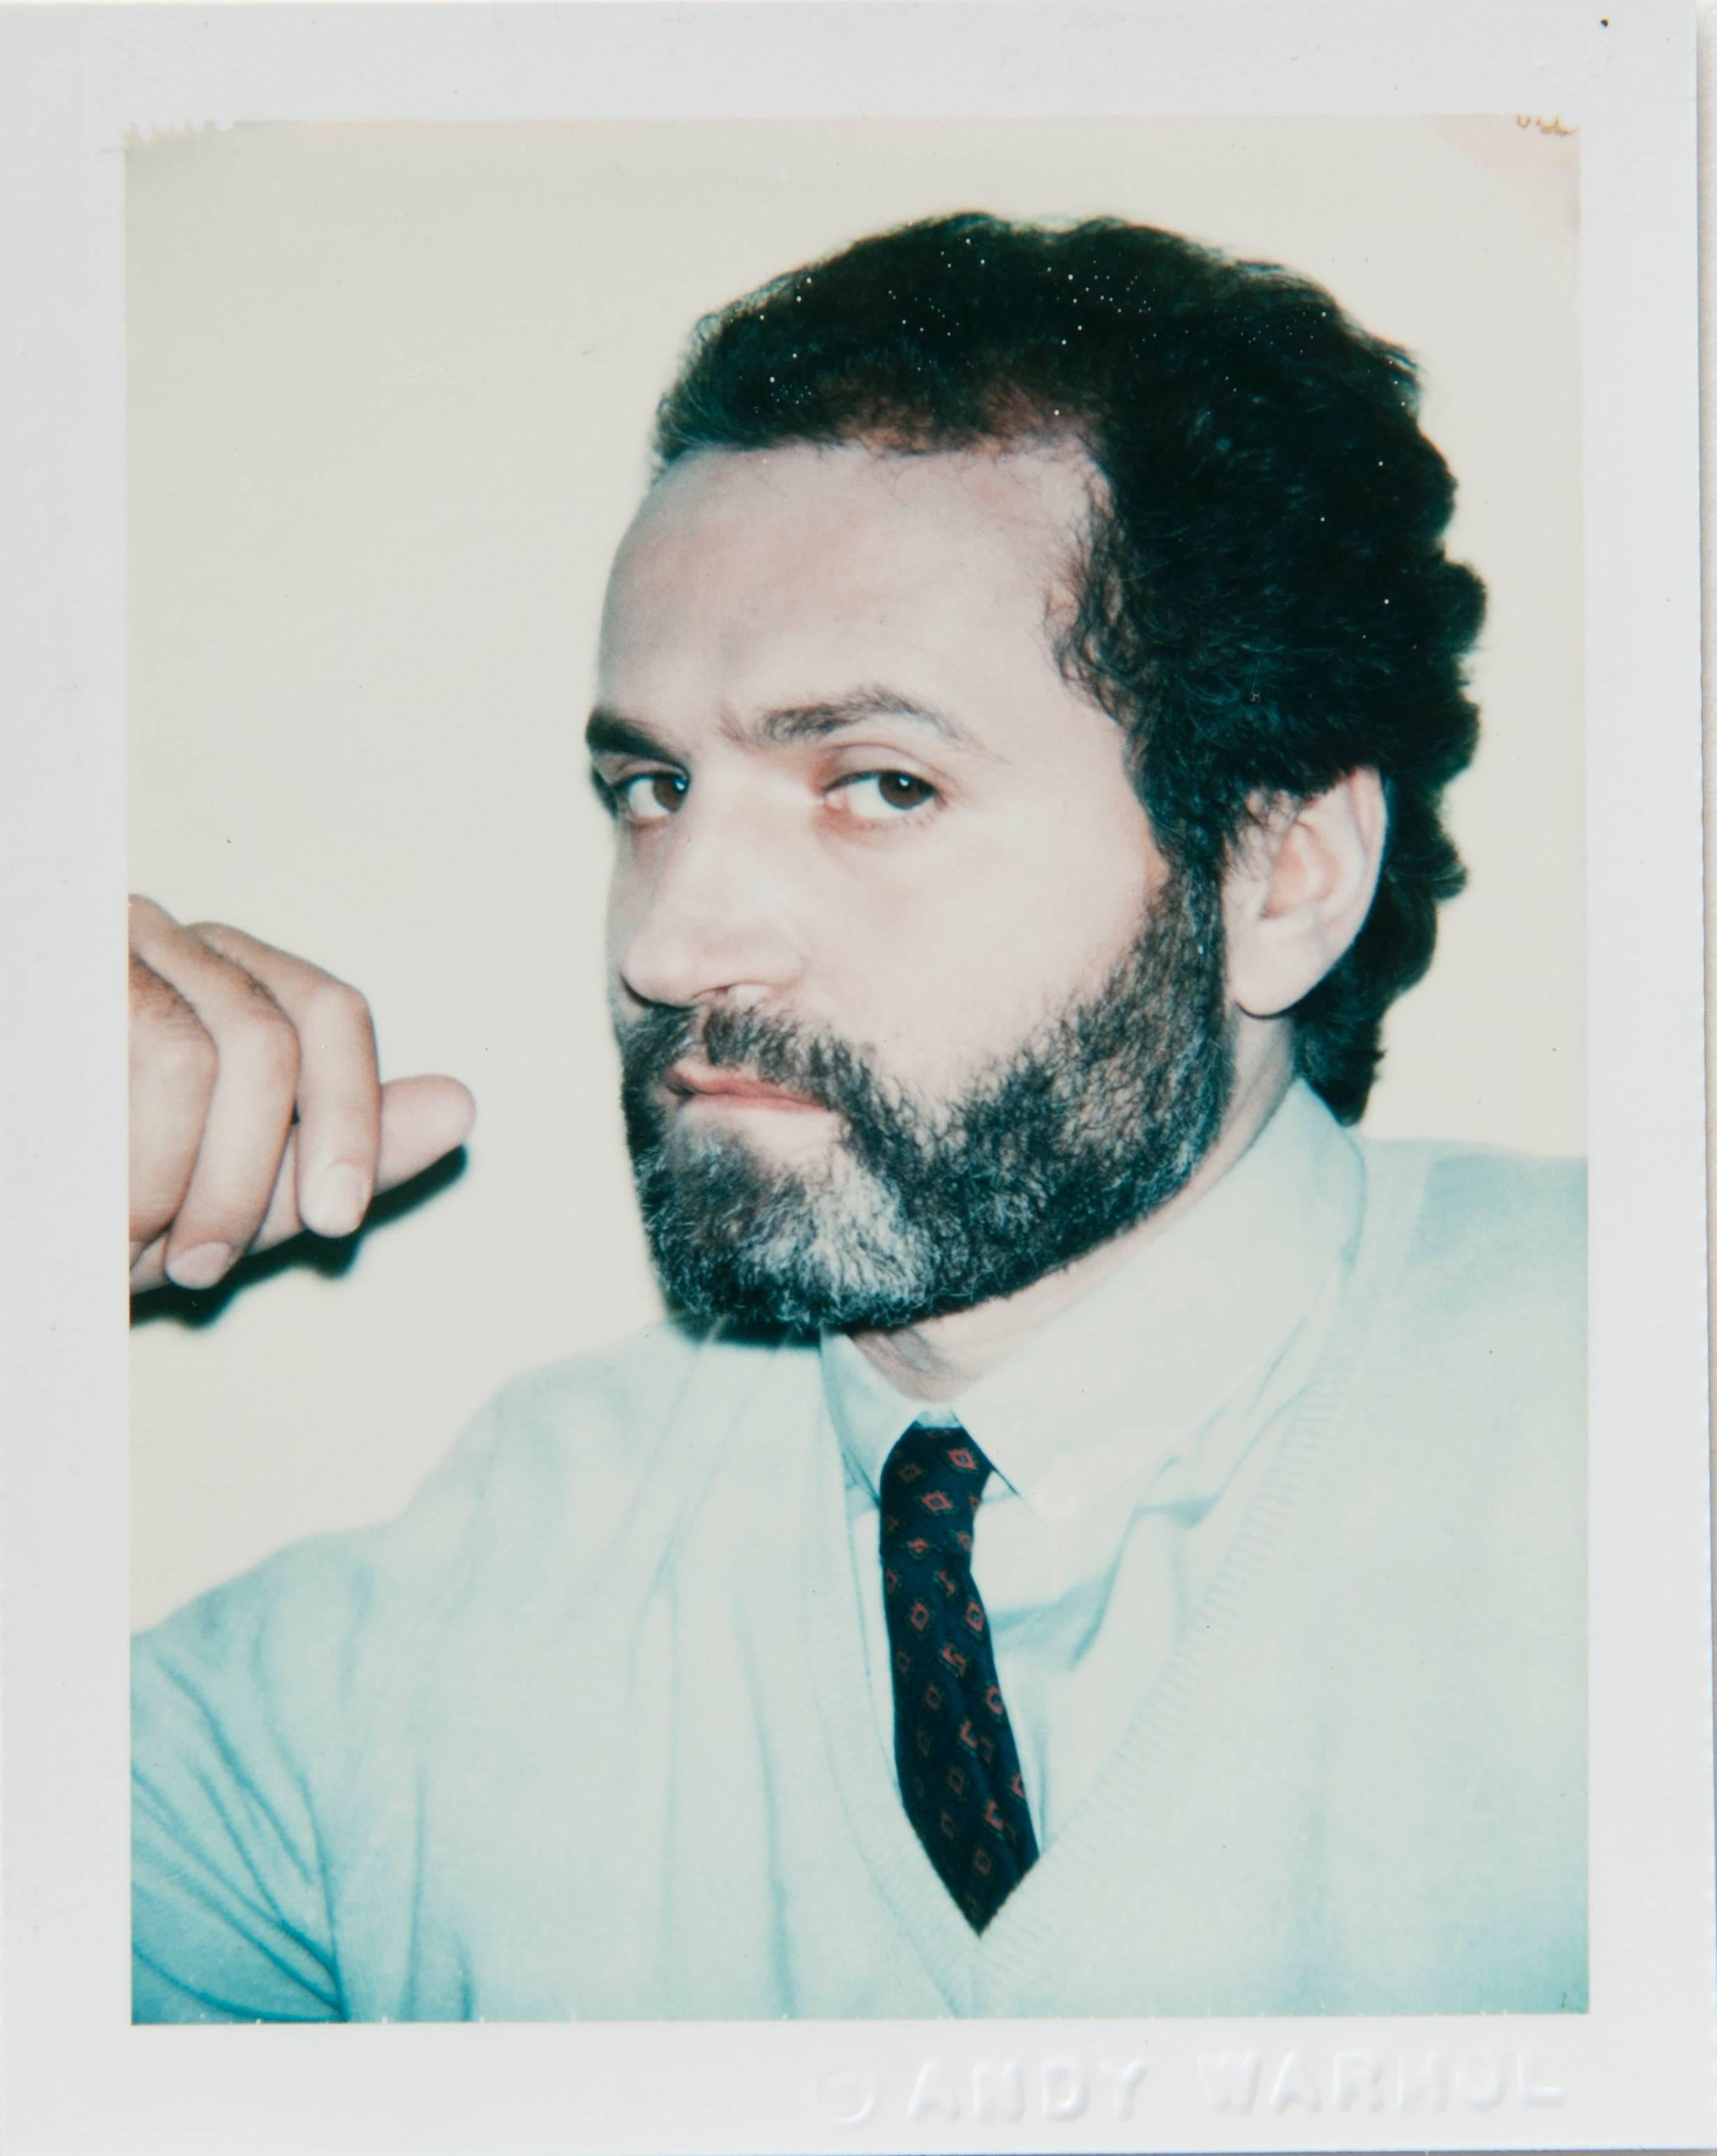 Andy Warhol Portrait Photograph - Gianni Versace Polaroid 